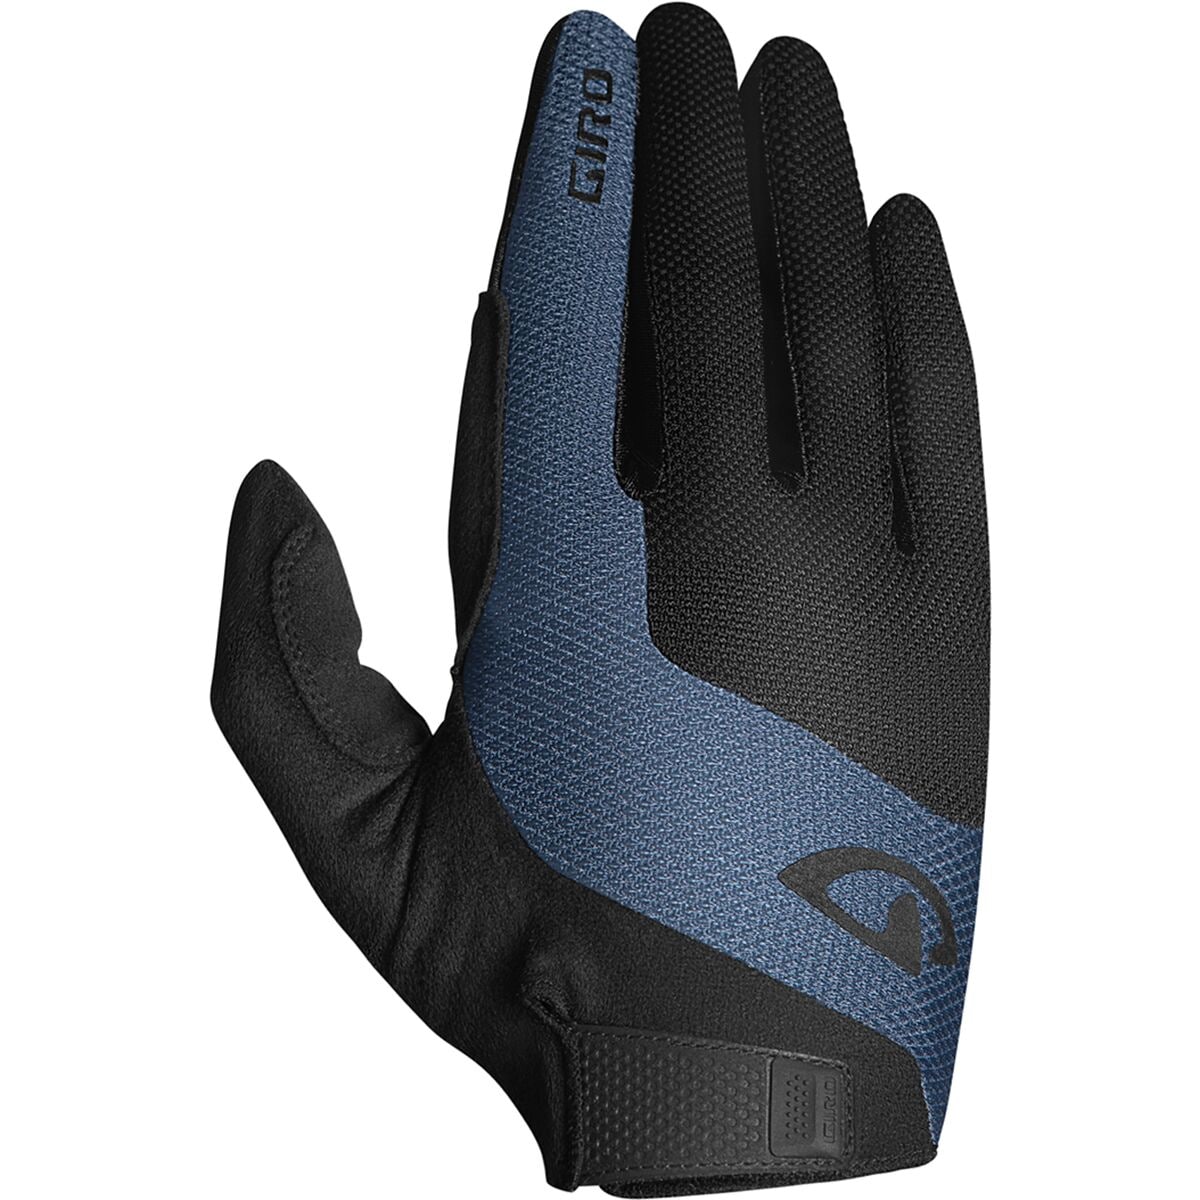 Giro Tessa Gel LF Glove - Women's Black/Harbor Blue, S